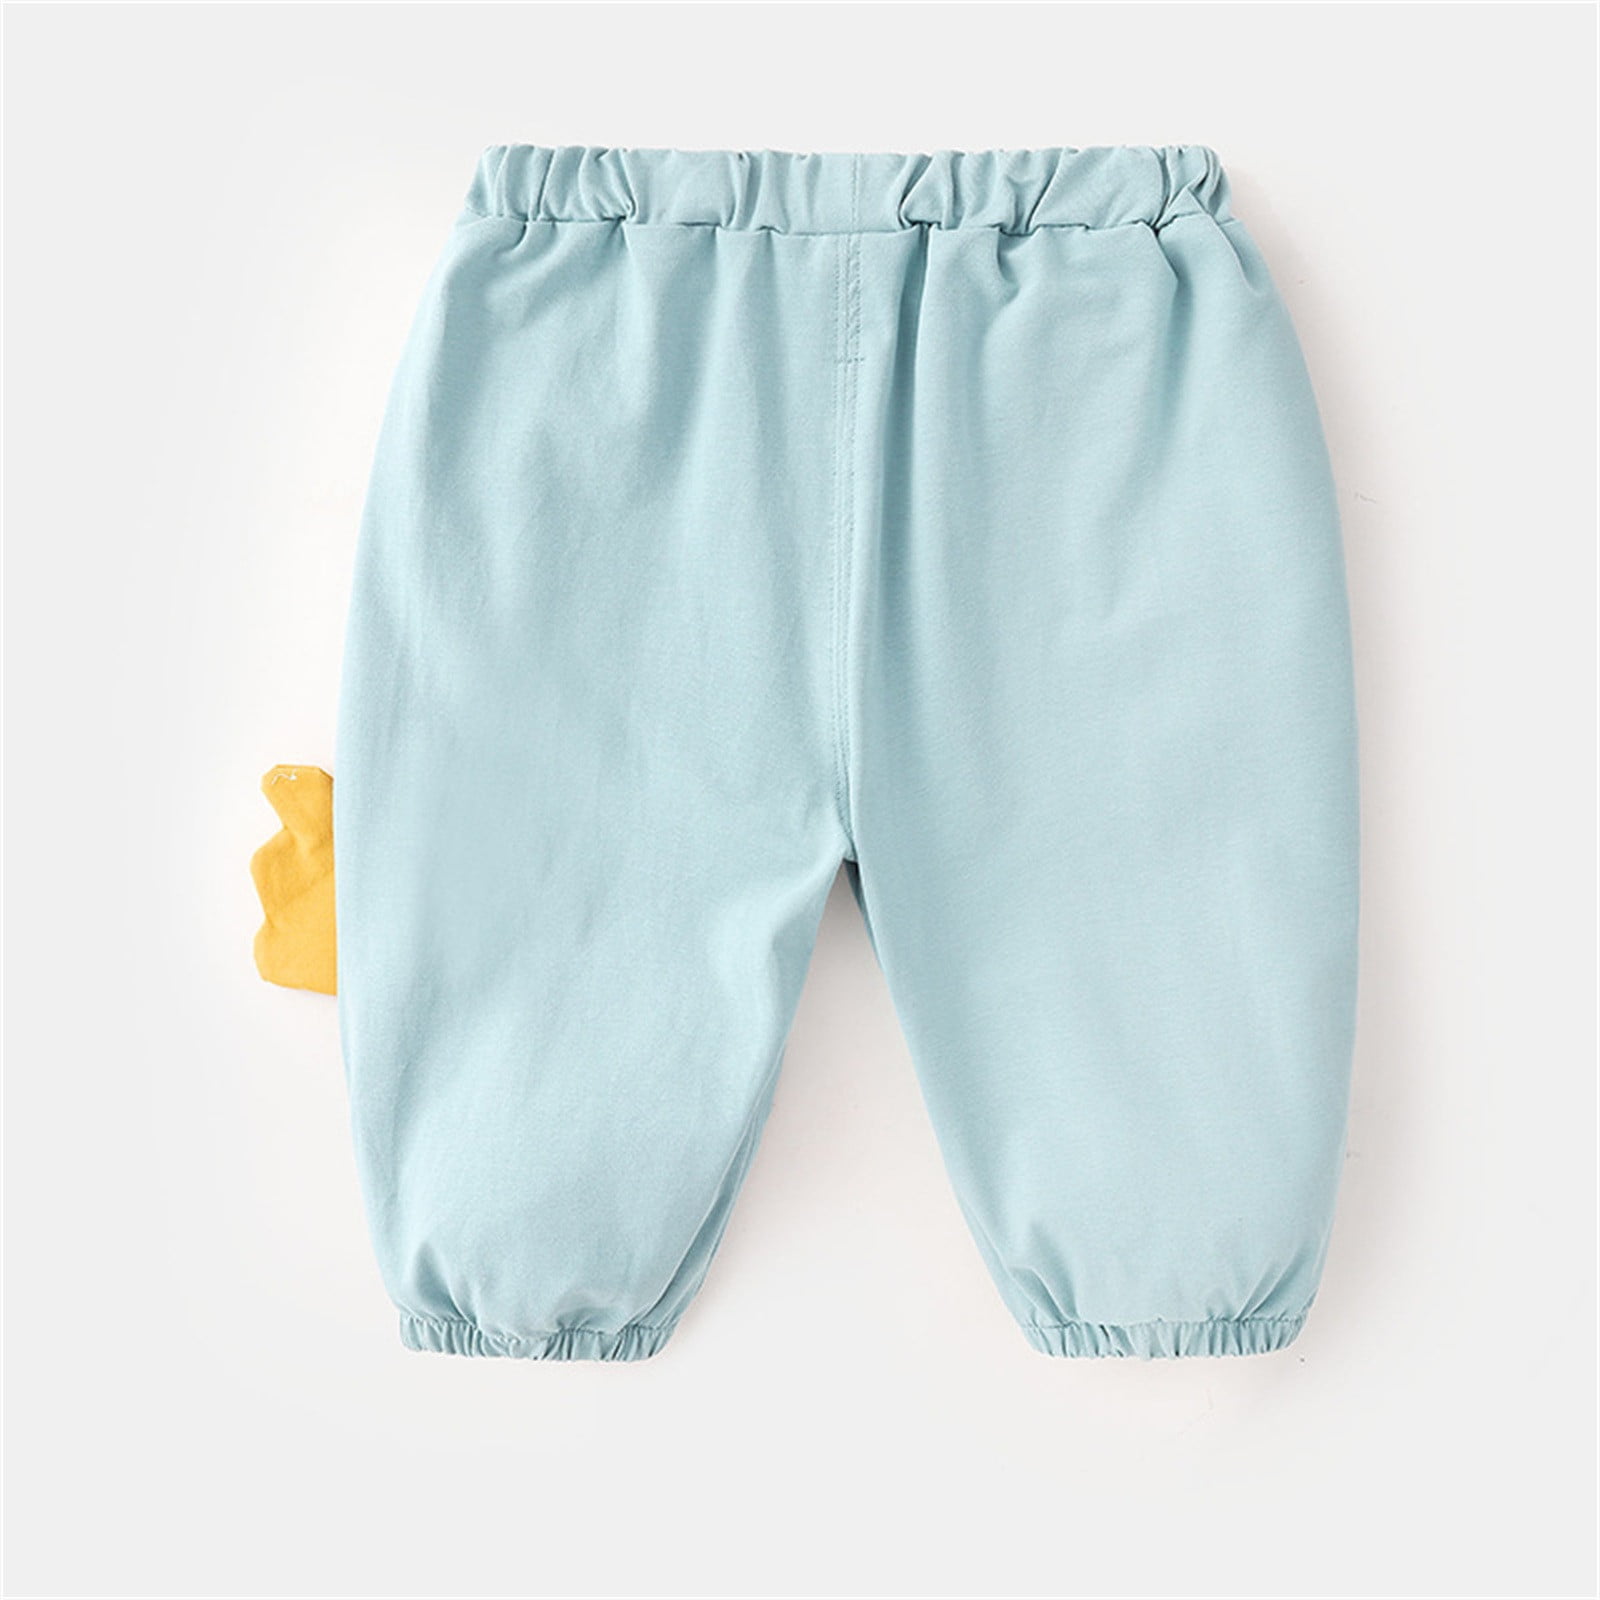 adviicd 4t Designer Clothes Baby Set Shirt Shorts Kids Gentleman